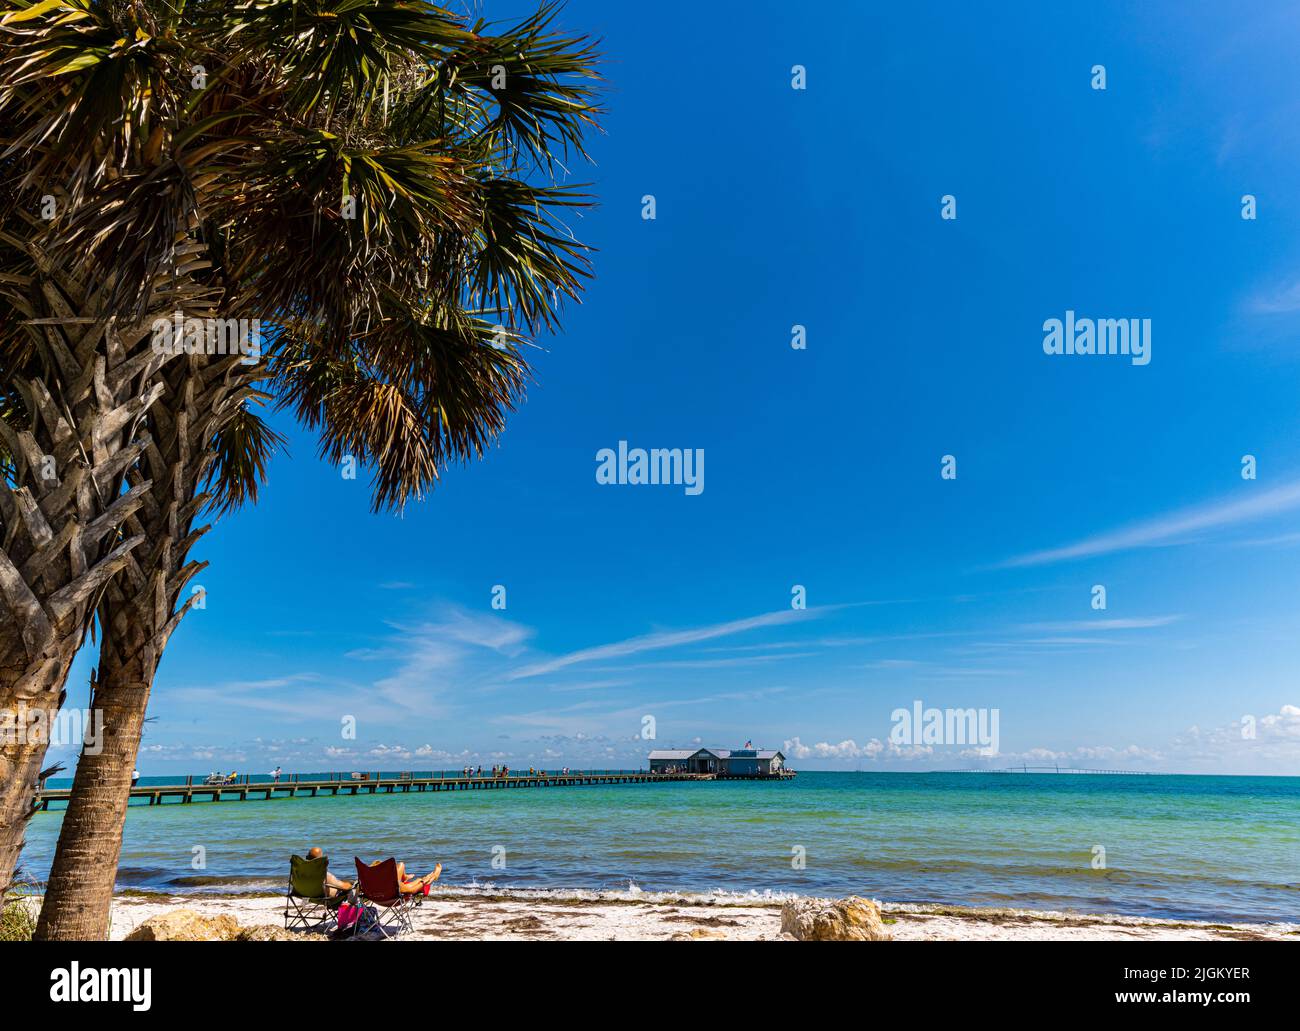 Sunbathers on Beach With Amelia Island Pier in The Distance, Amelia Island, Florida, USA Stock Photo